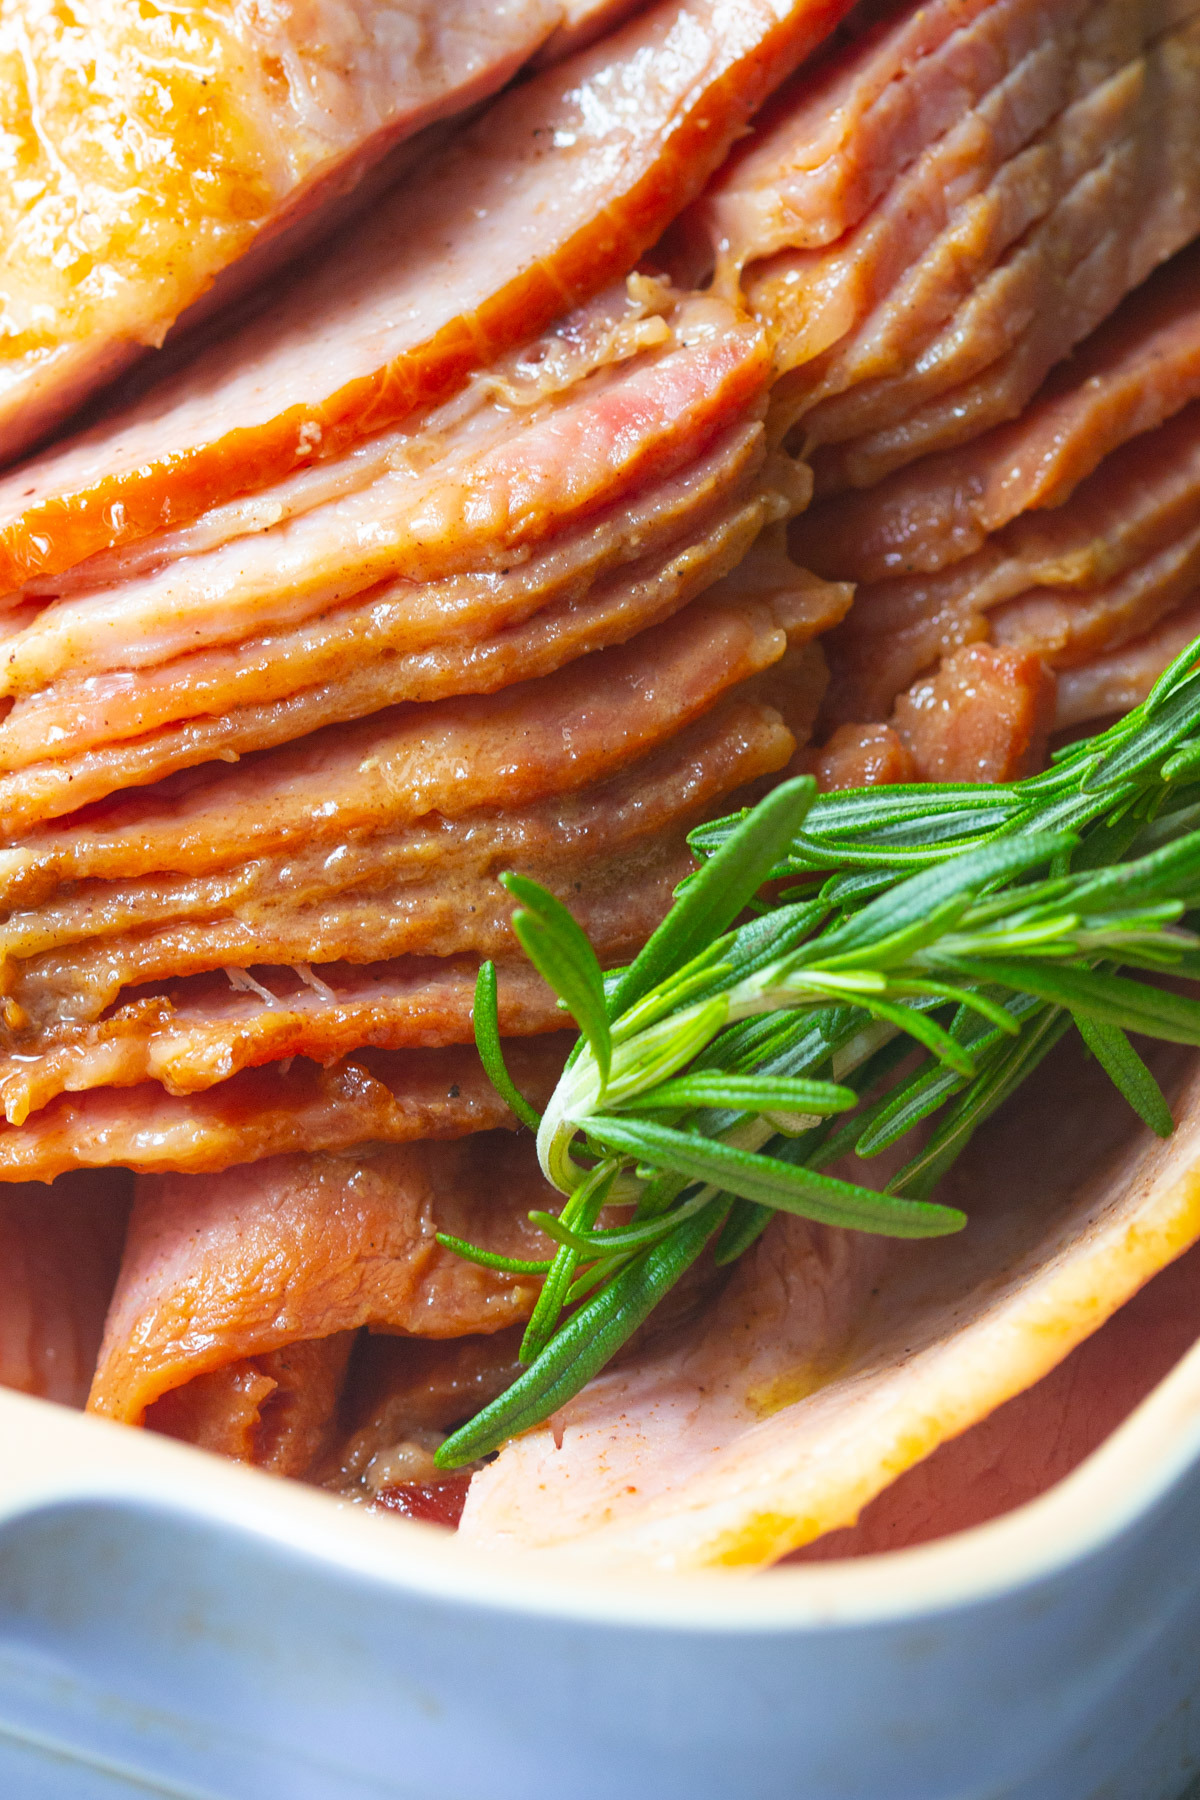 Slices of spiral ham (honey glazed ham) garnished with a sprig of rosemary